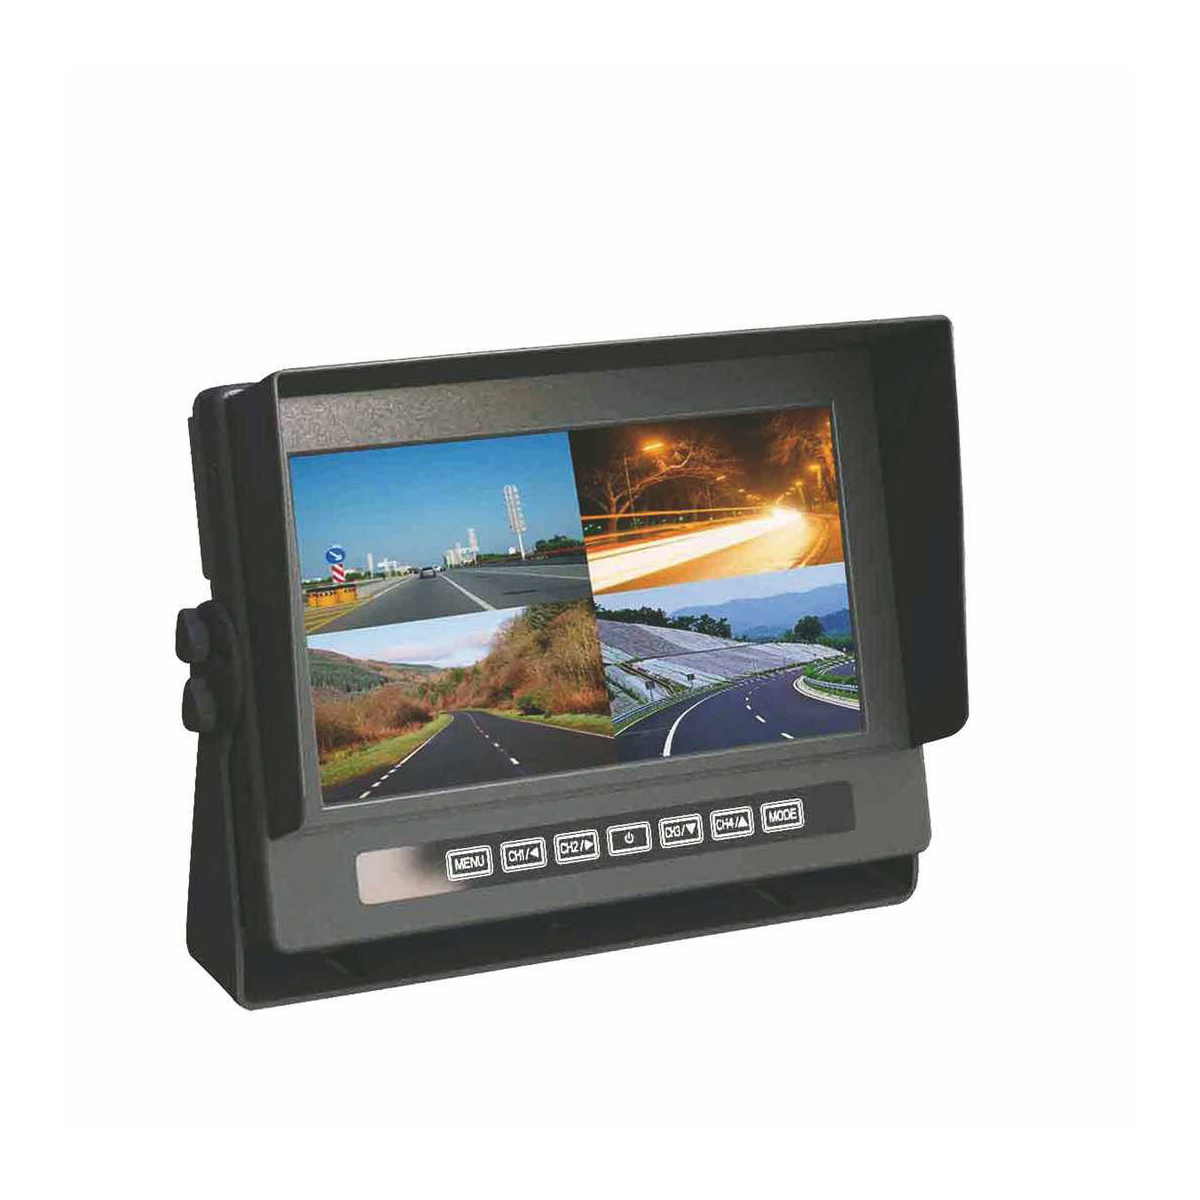 Dallux WPM7000Q Waterproof Quad Slip Image LCD Monitor